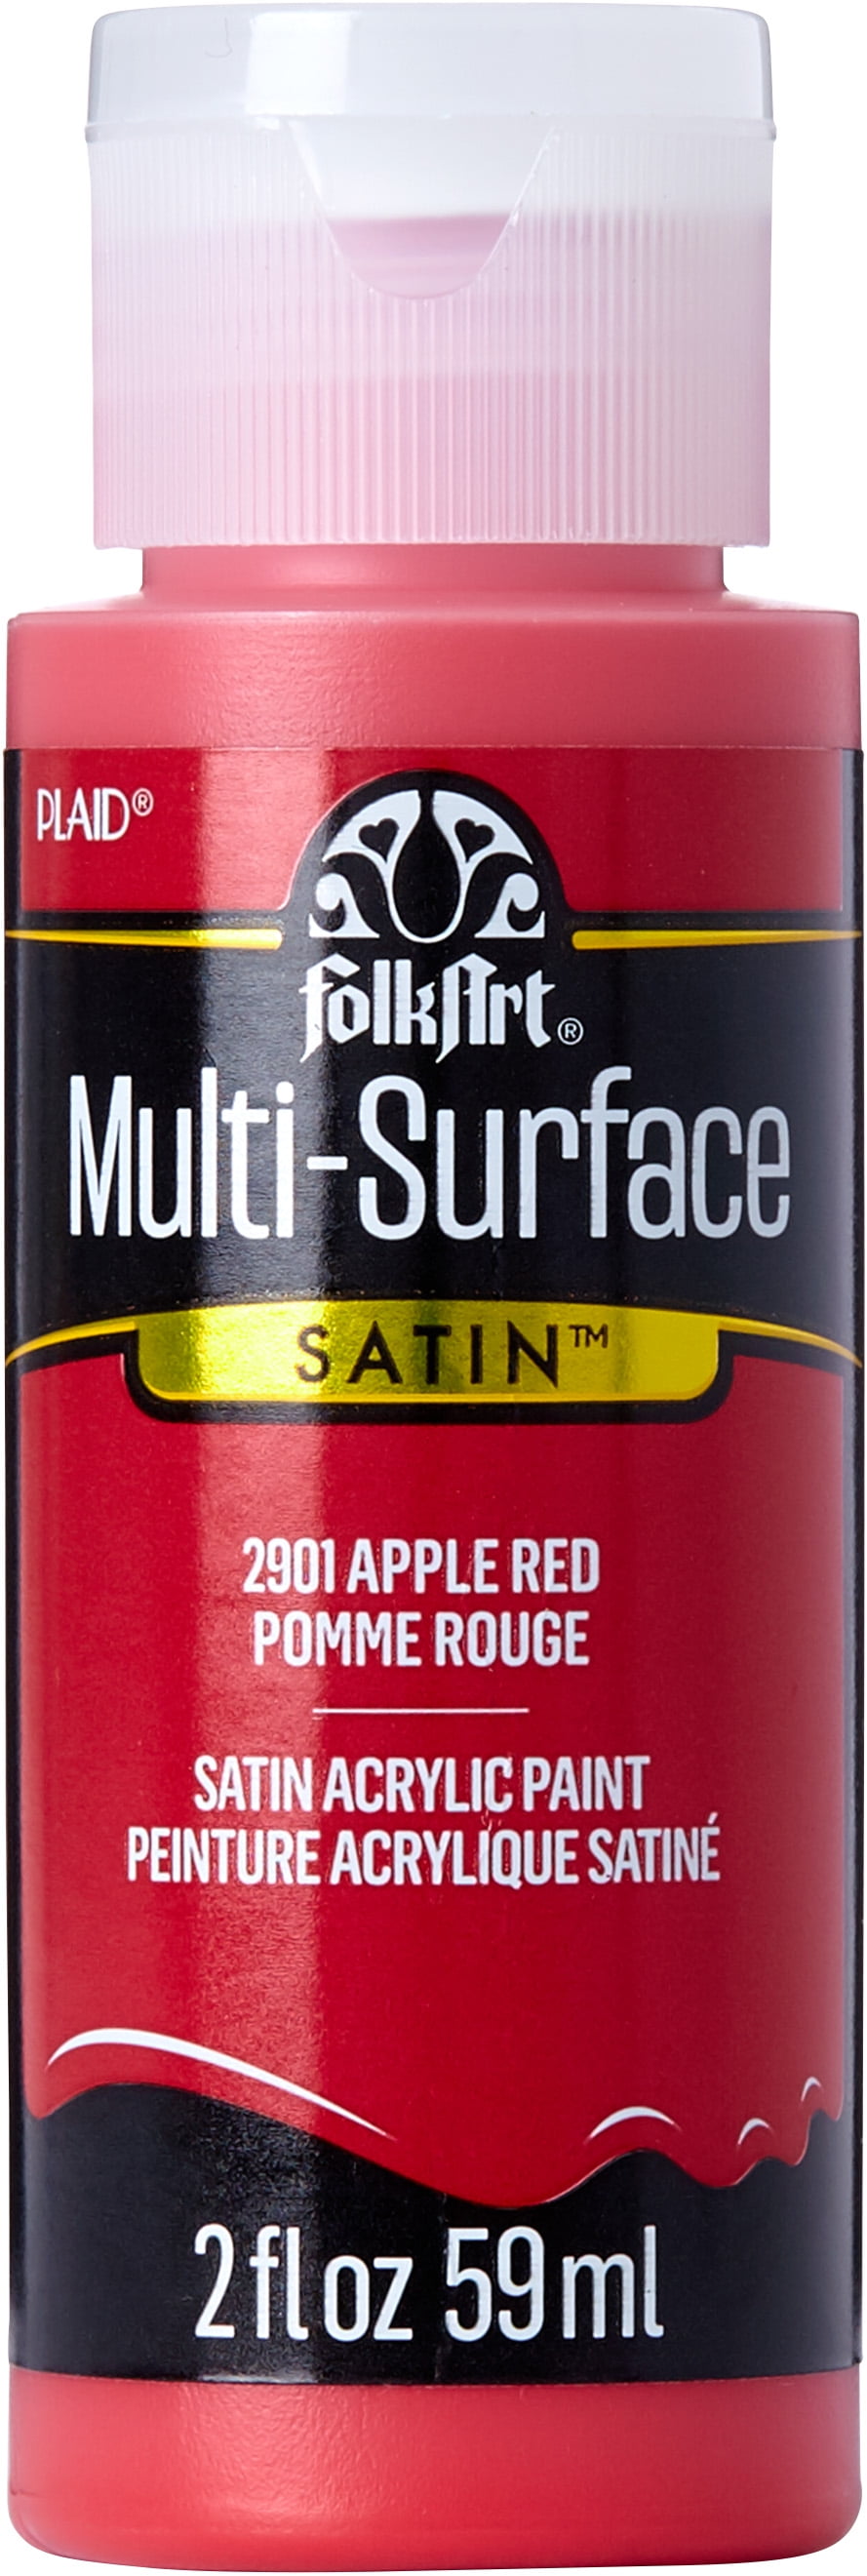 FolkArt Multi-Surface Acrylic Craft Paint, Satin Finish, Apple Red, 2 fl oz